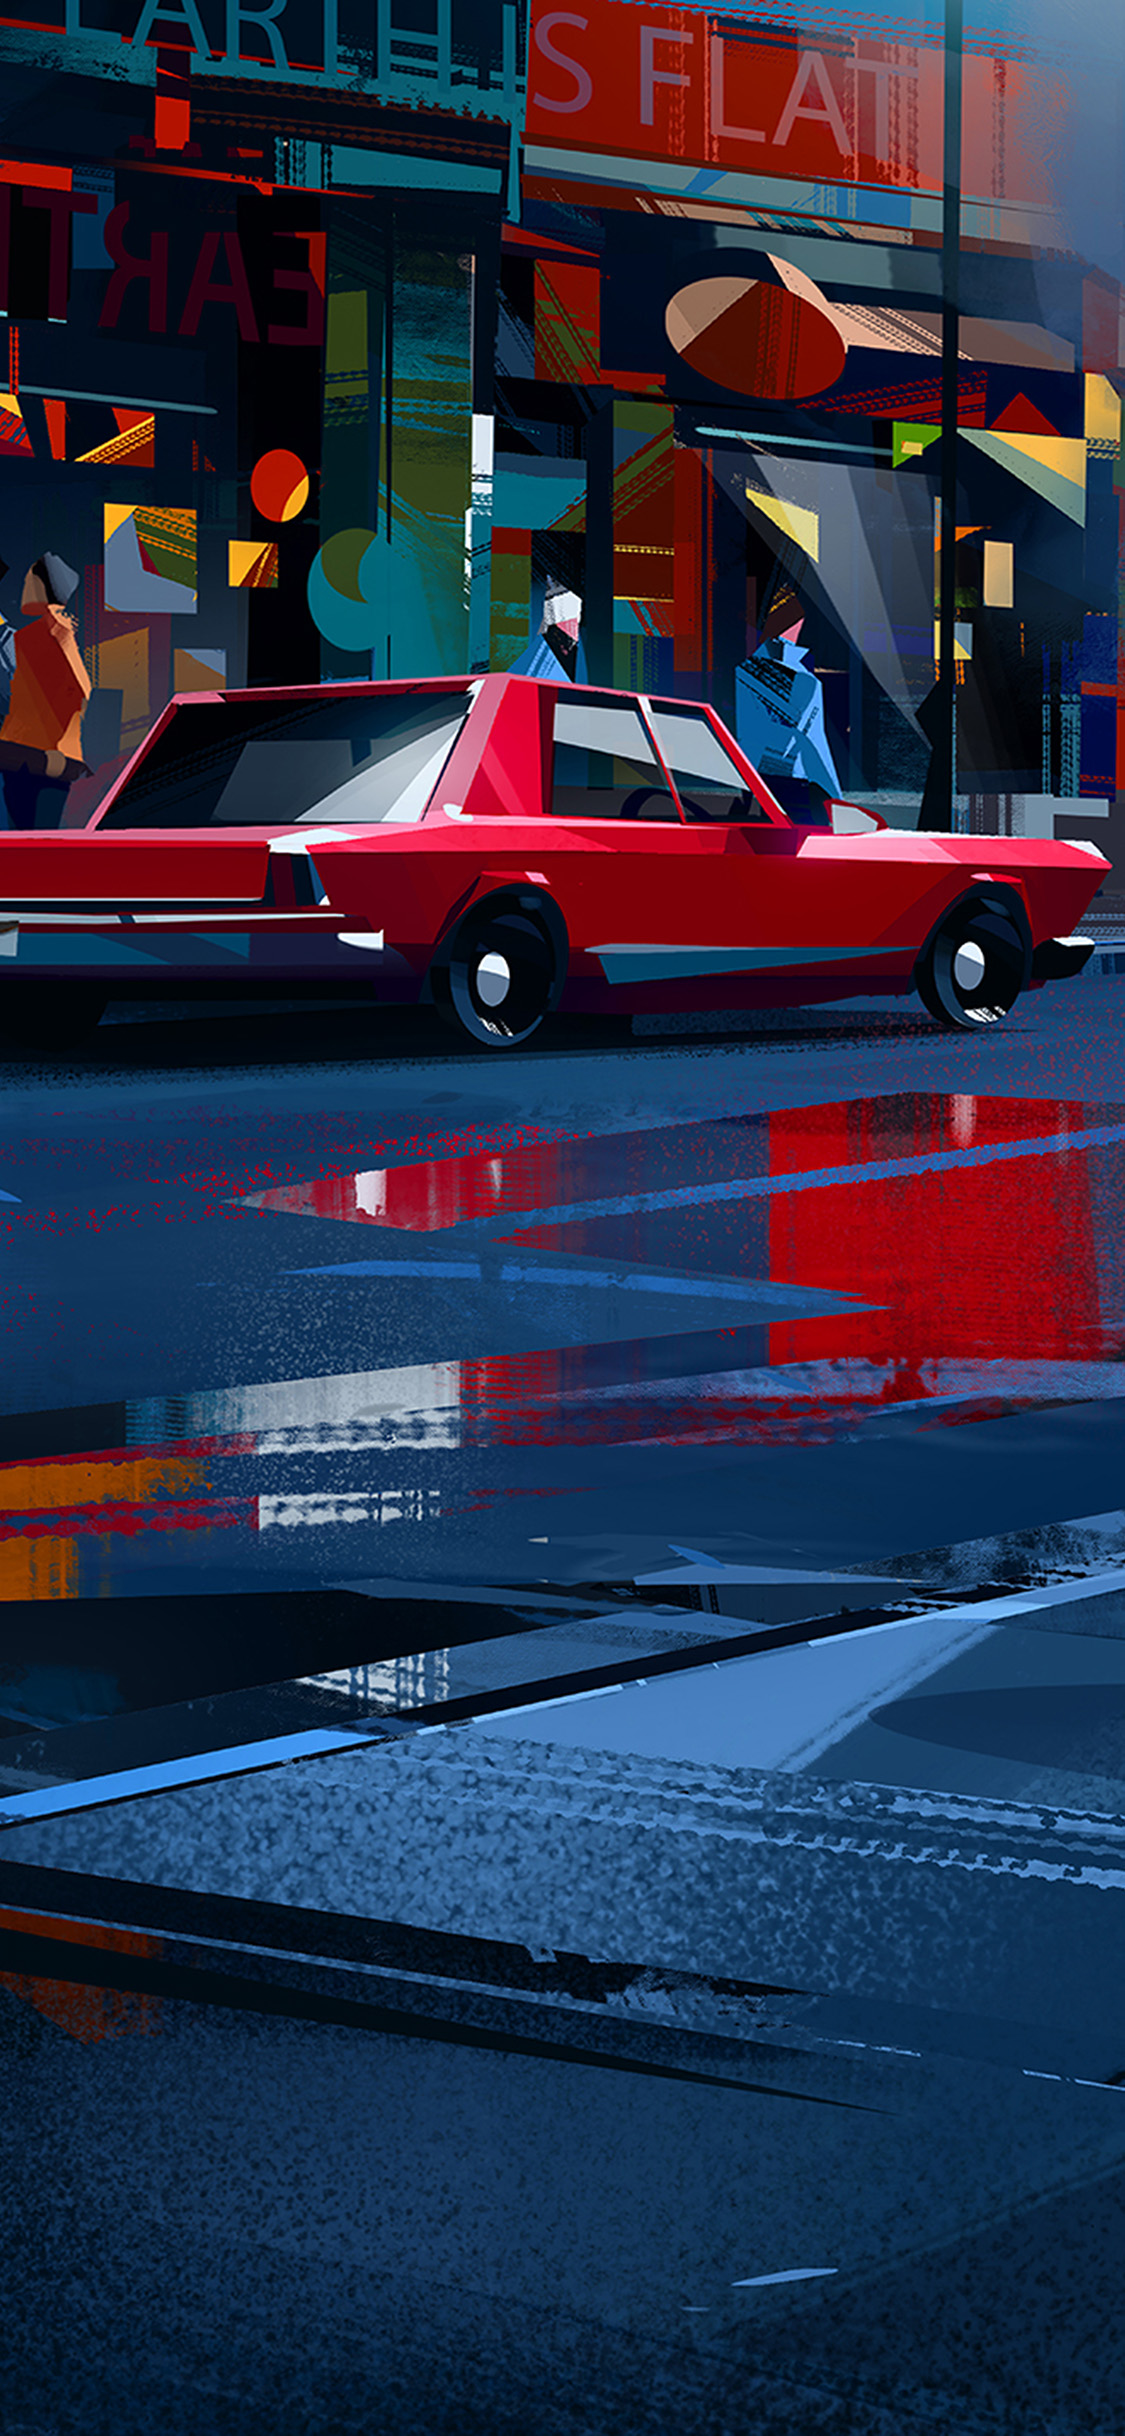 iPhone X wallpaper. art car drawing red